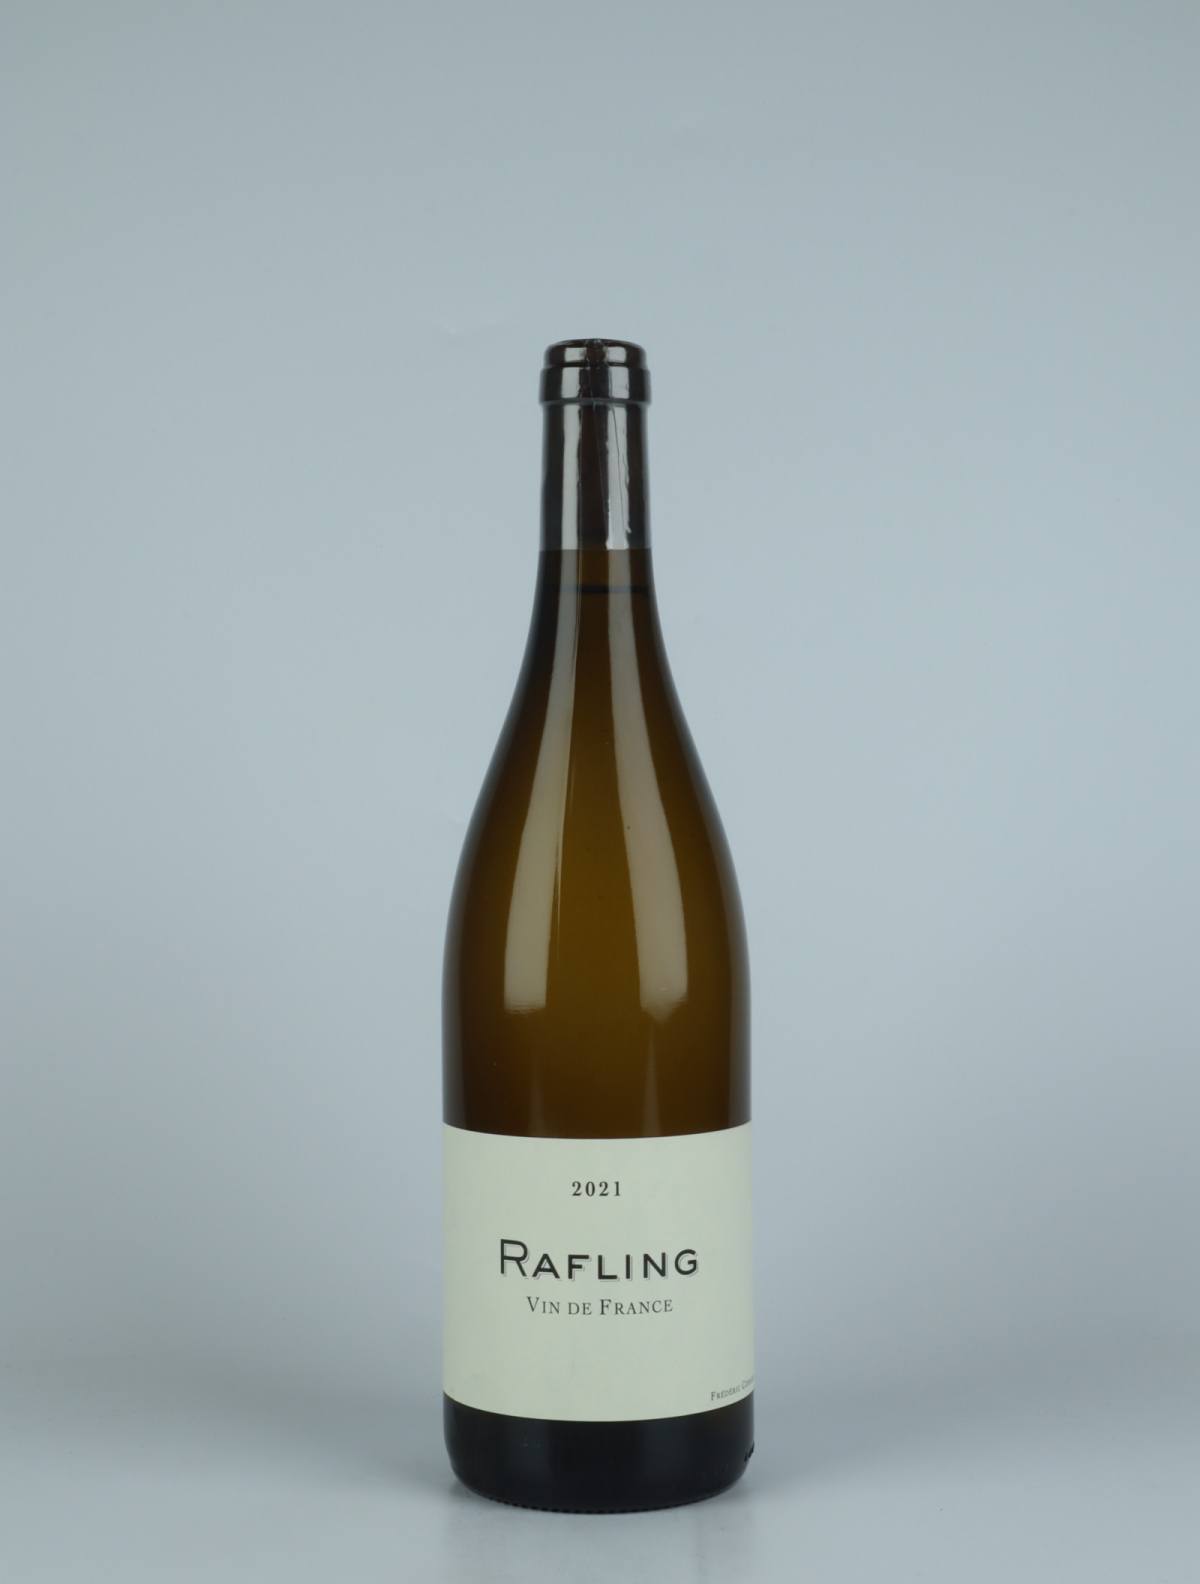 A bottle 2021 Rafling Orange wine from Frédéric Cossard, Alsace in France